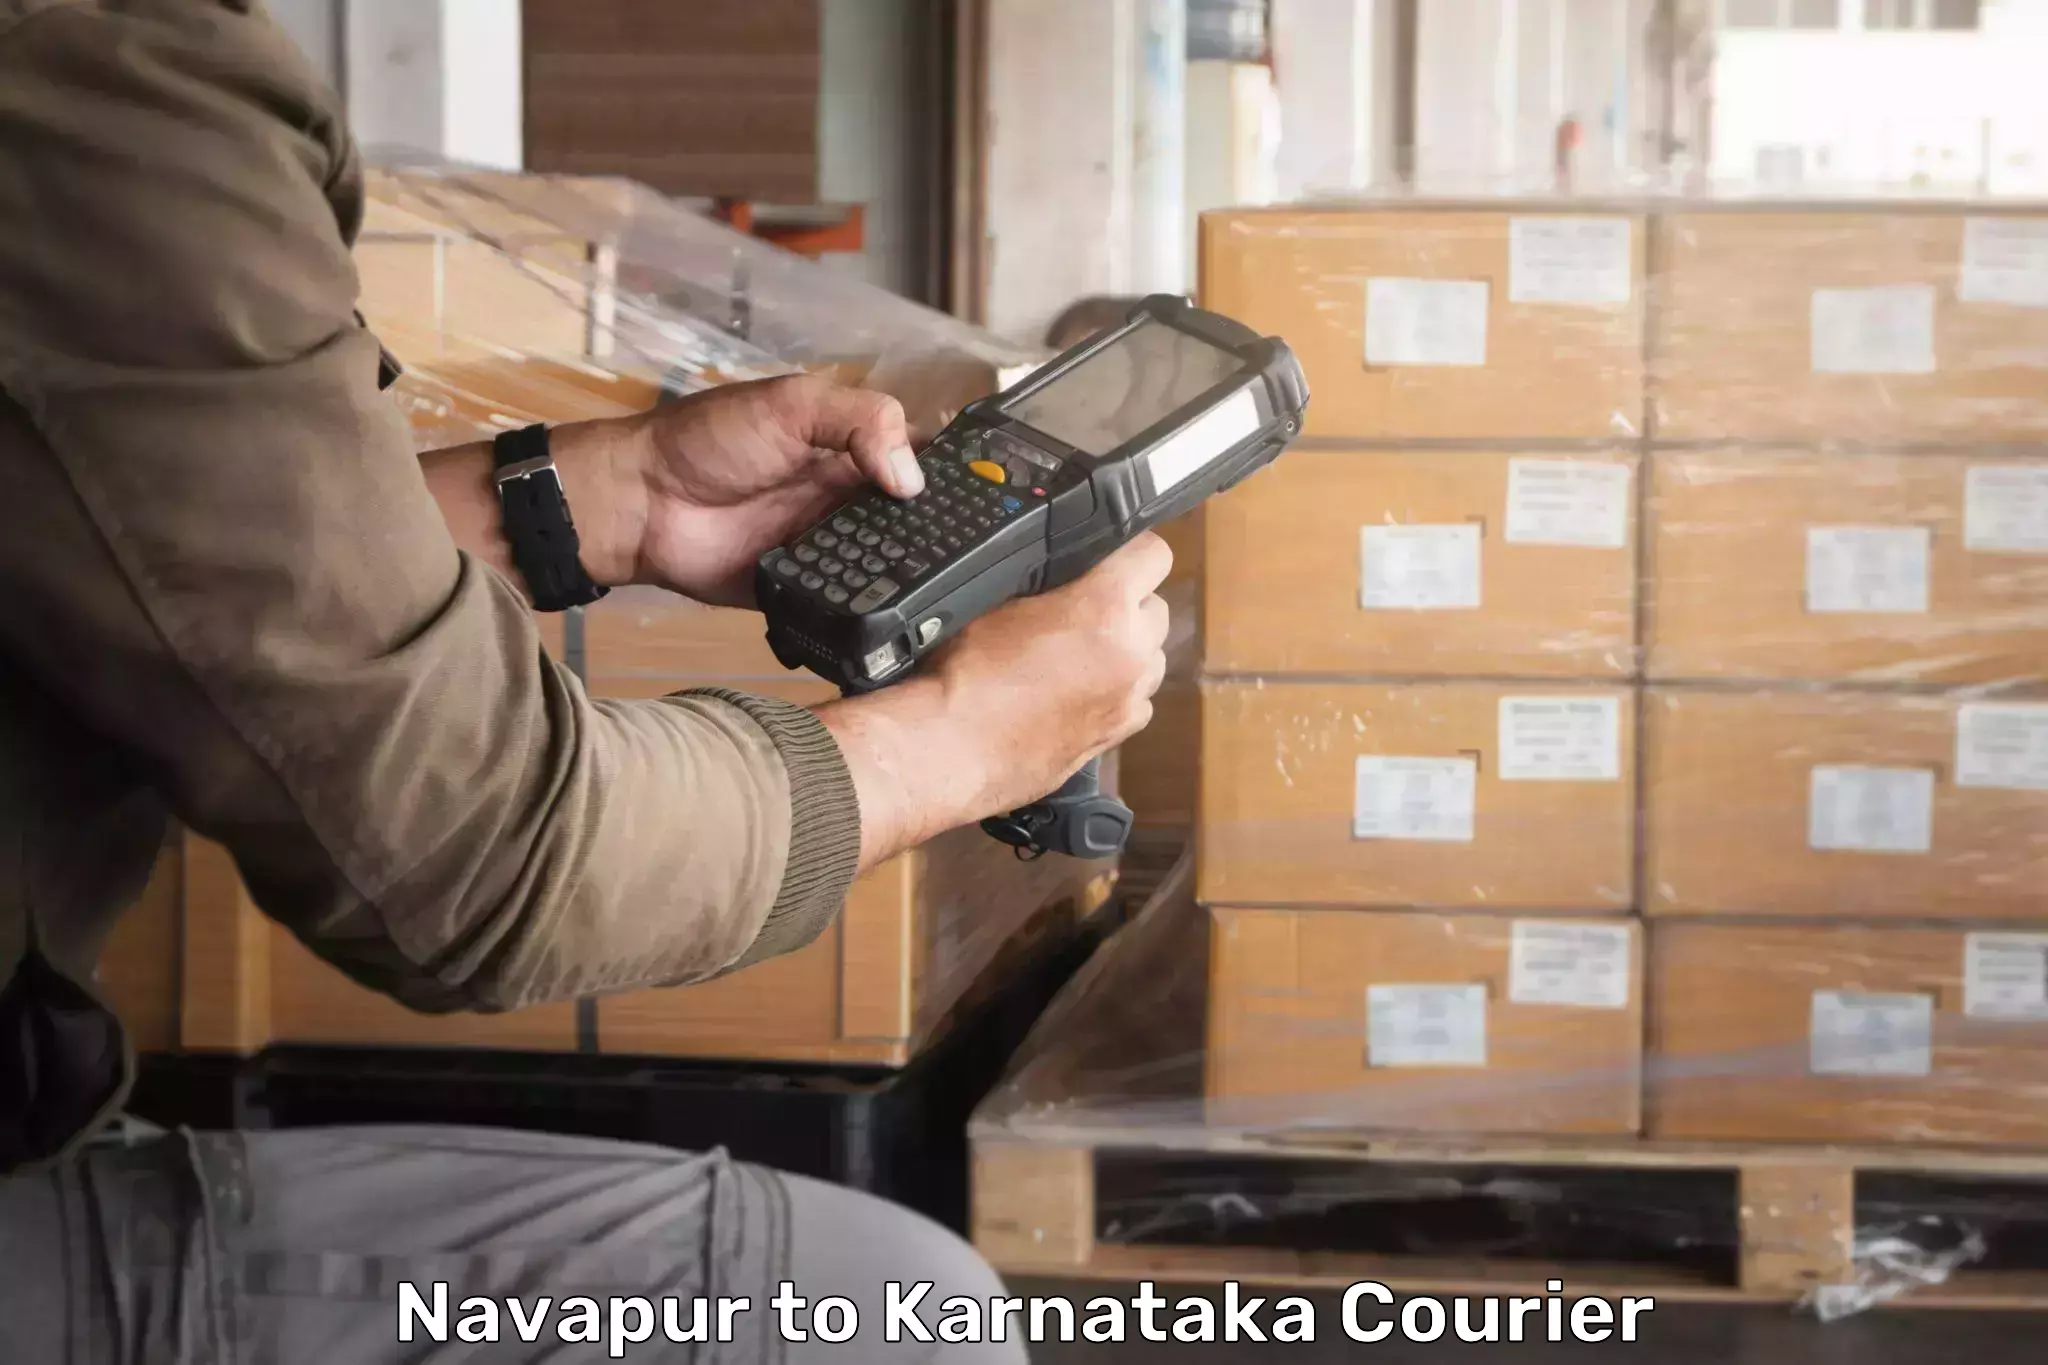 Advanced package delivery Navapur to Kanjarakatte